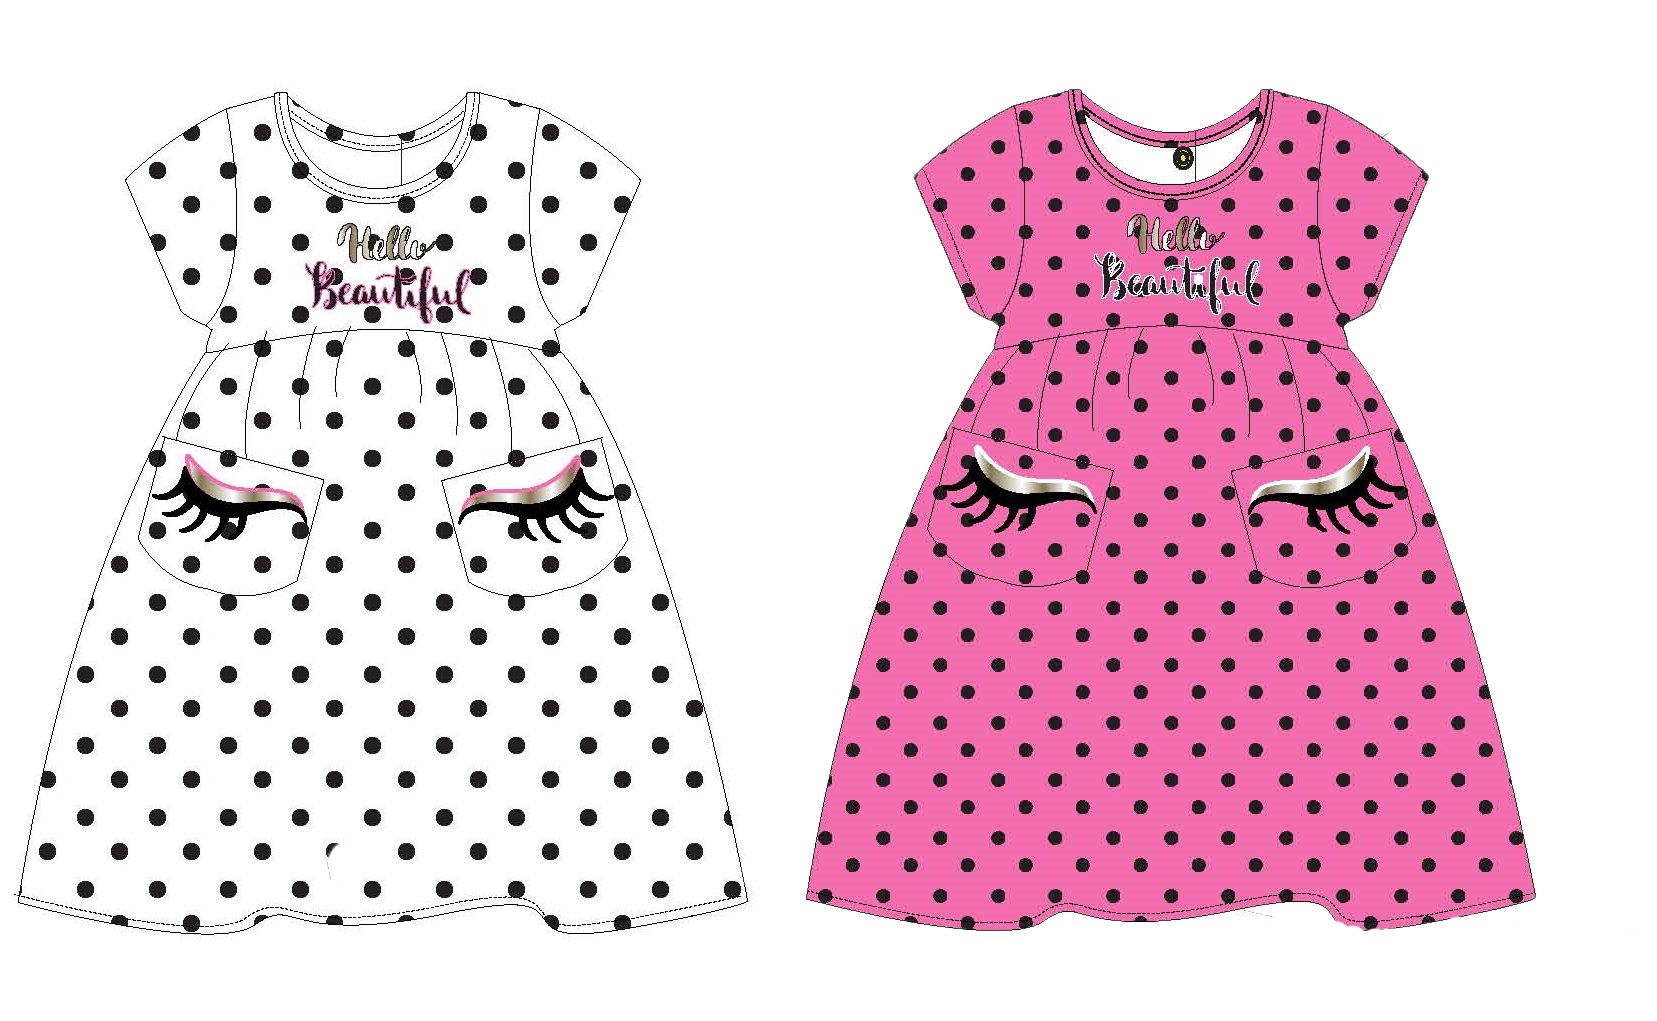 Infant Girl's Knit Hello Beautiful Dresses w/ Polka Dots & Blush Eye-Lash Print - Sizes 0/3M-9M